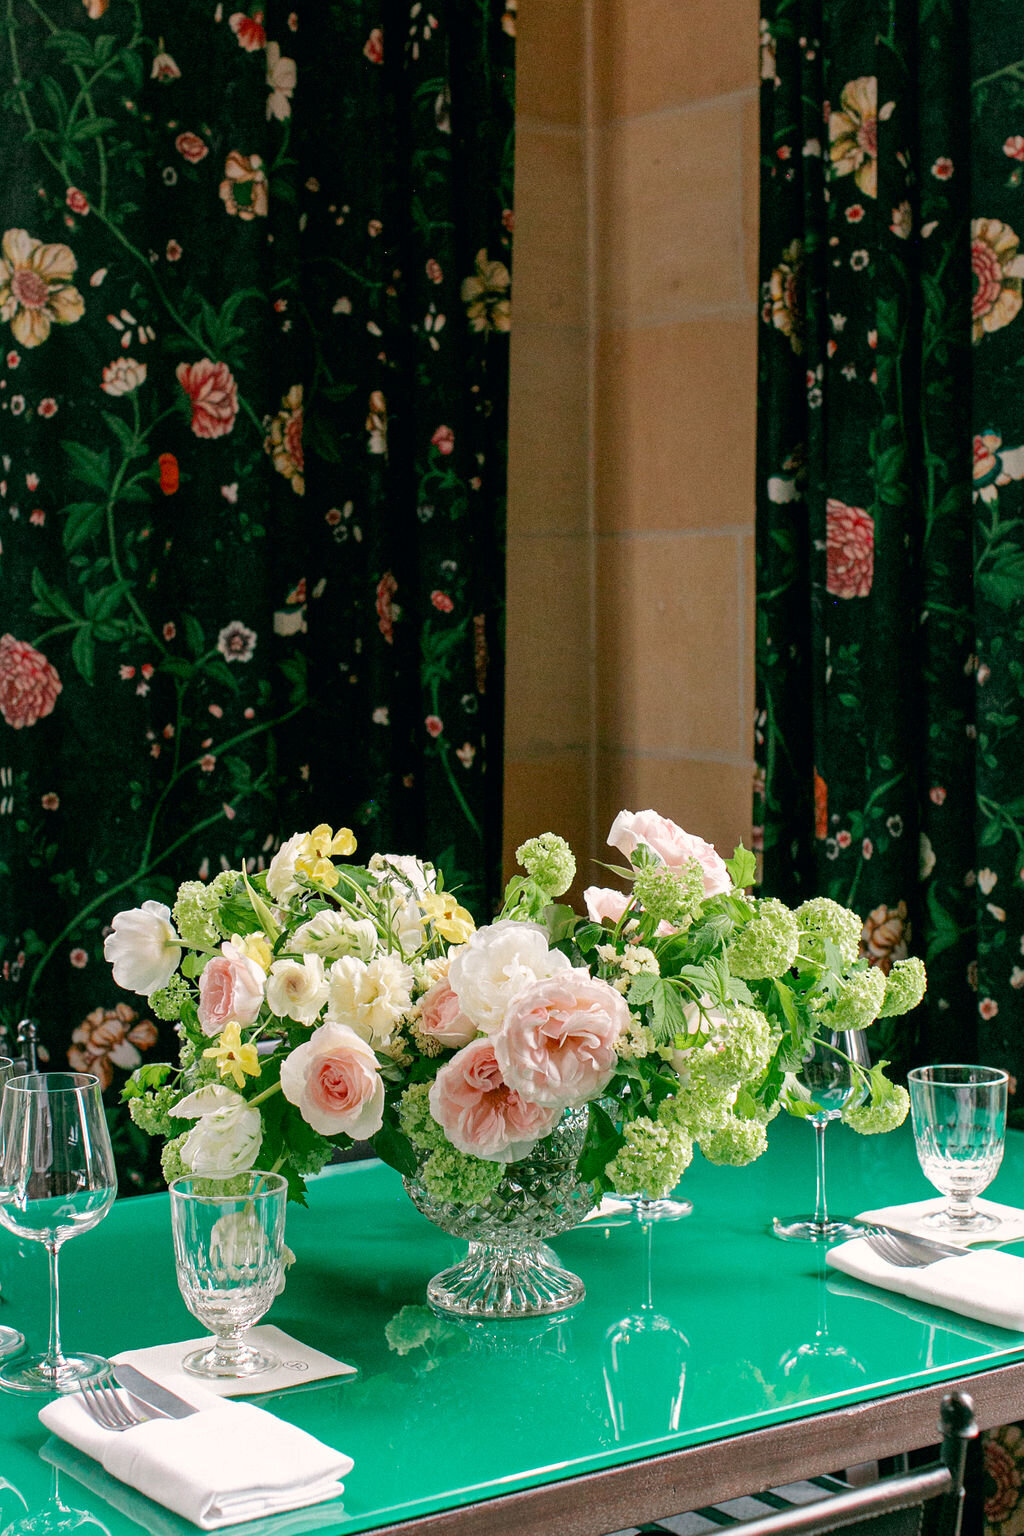 max-owens-design-at-home-floral-arrangements-12-restaurant-centerpiece